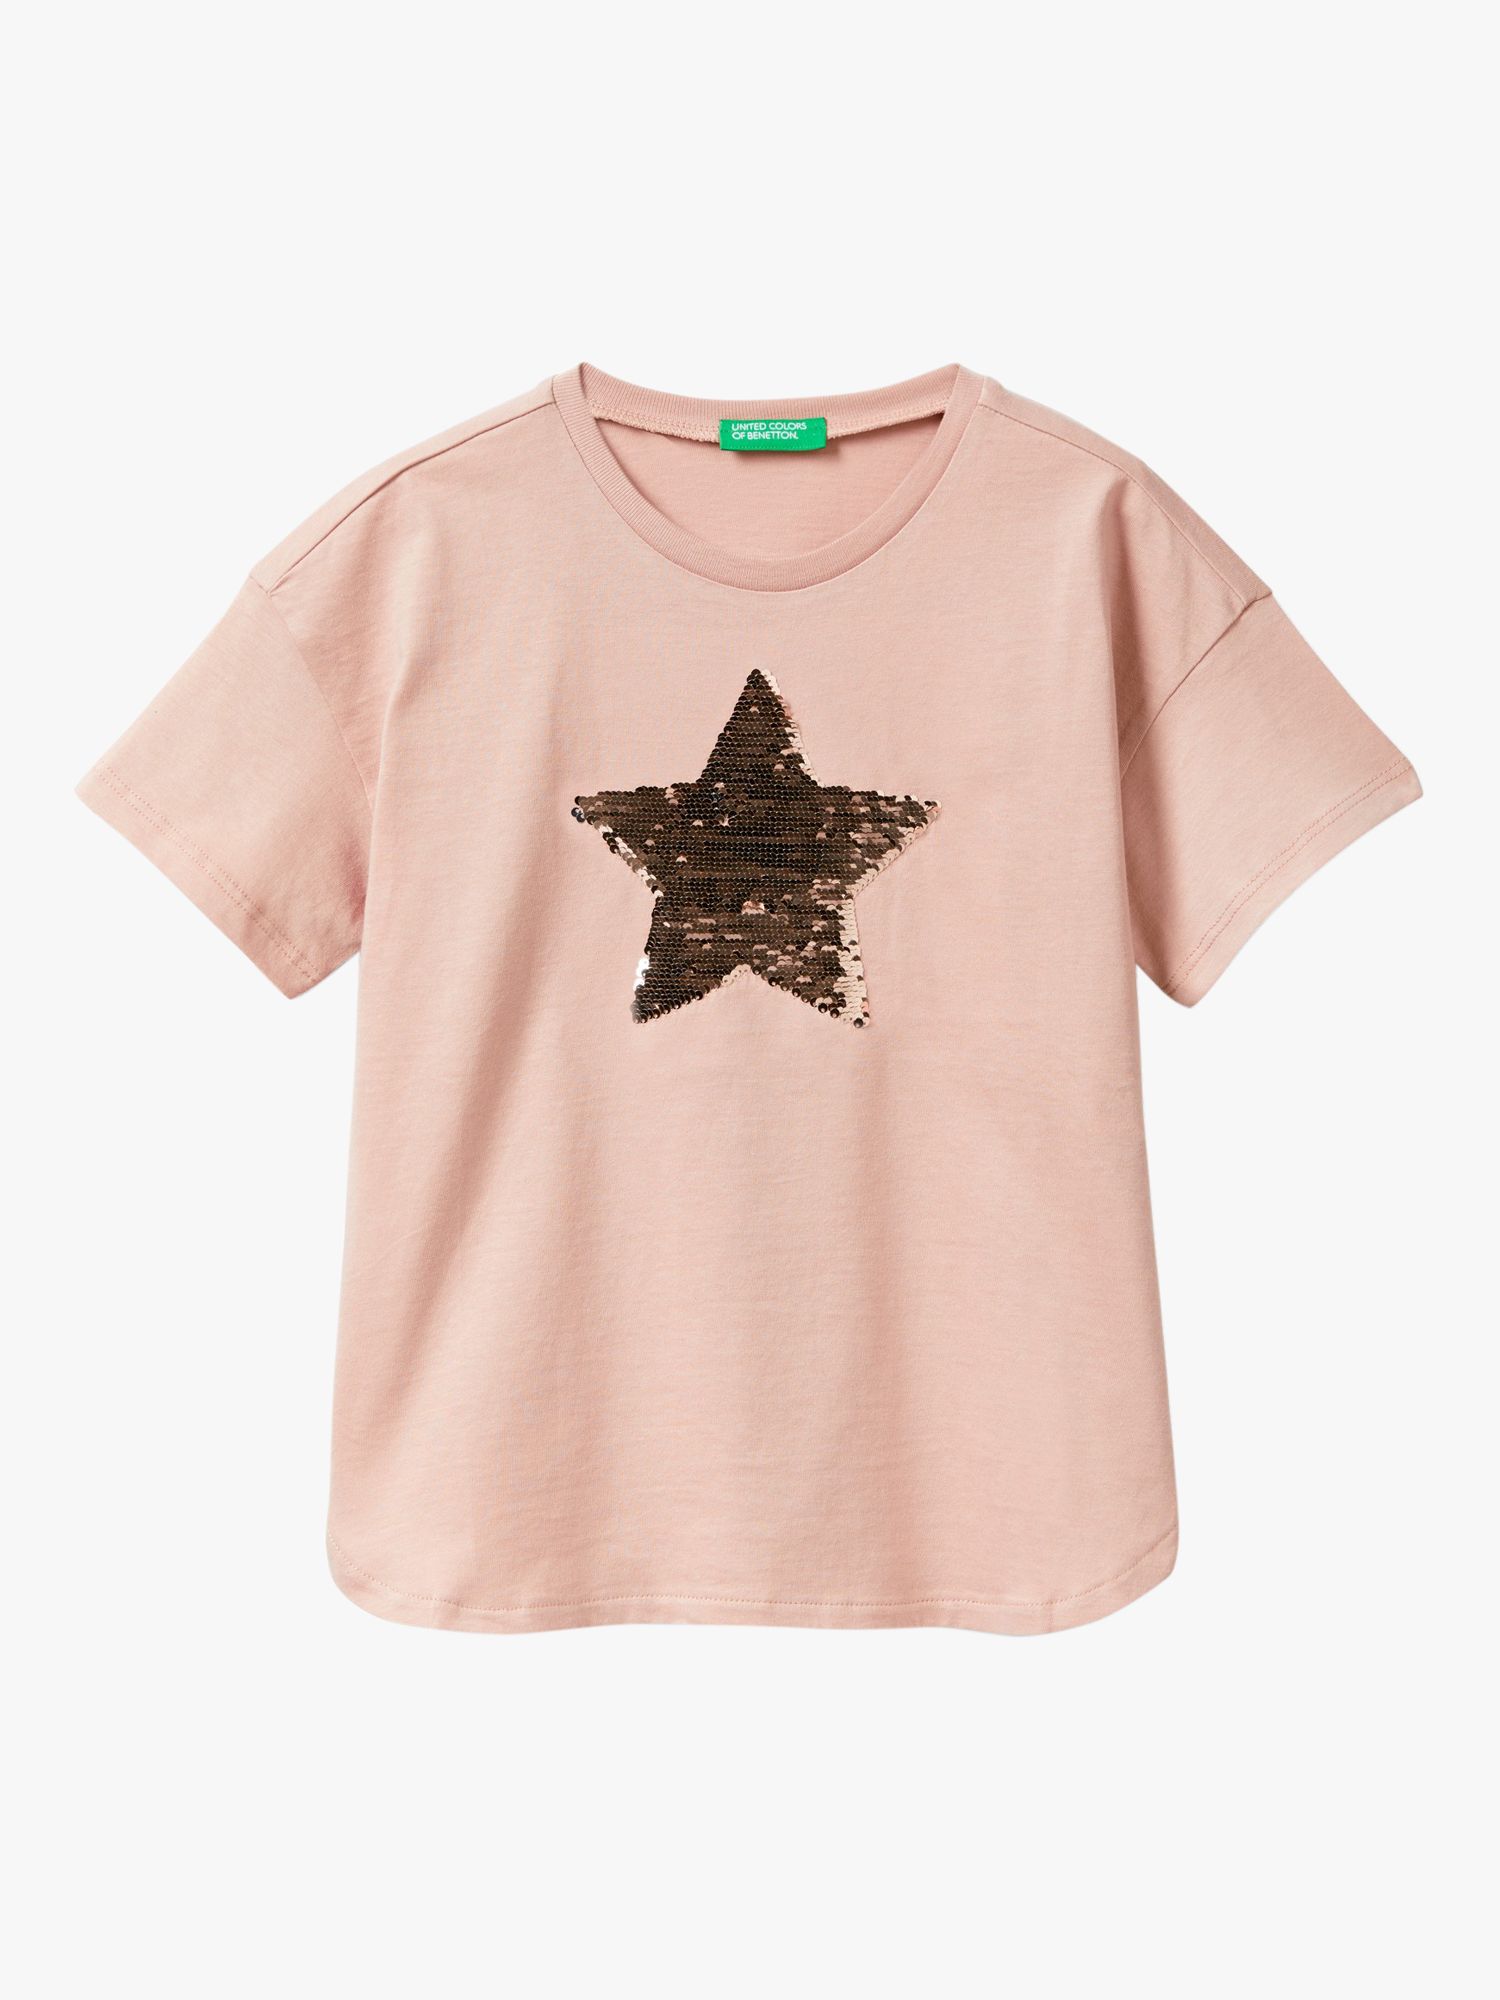 Benetton Kids' Sequin Star Short Sleeve T-Shirt, Dark Powder, 6-7 years